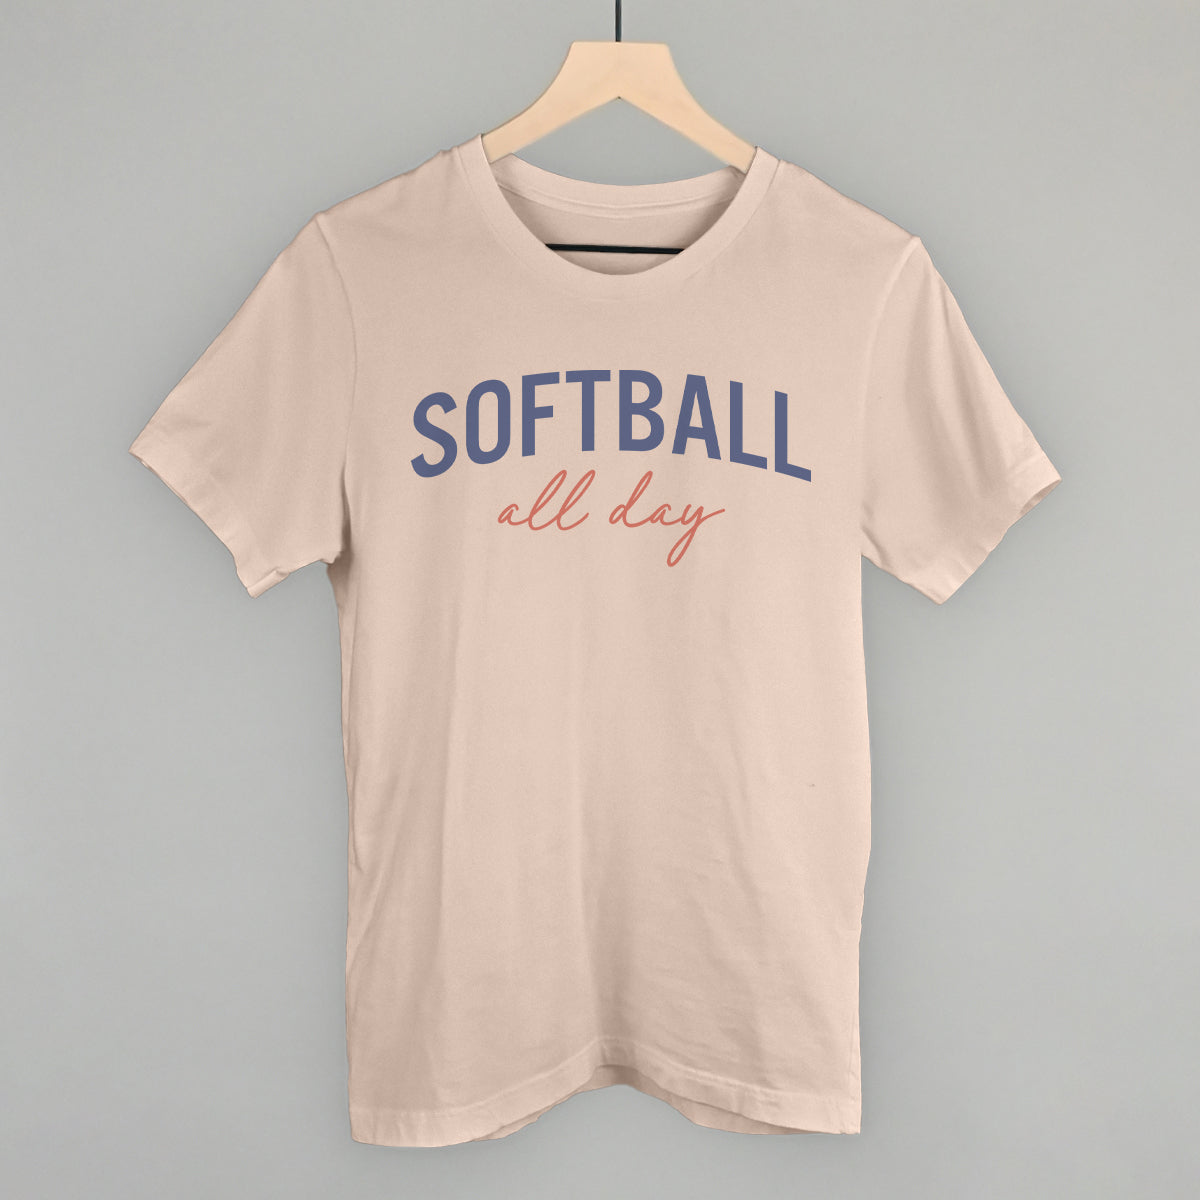 Softball All Day (Script)